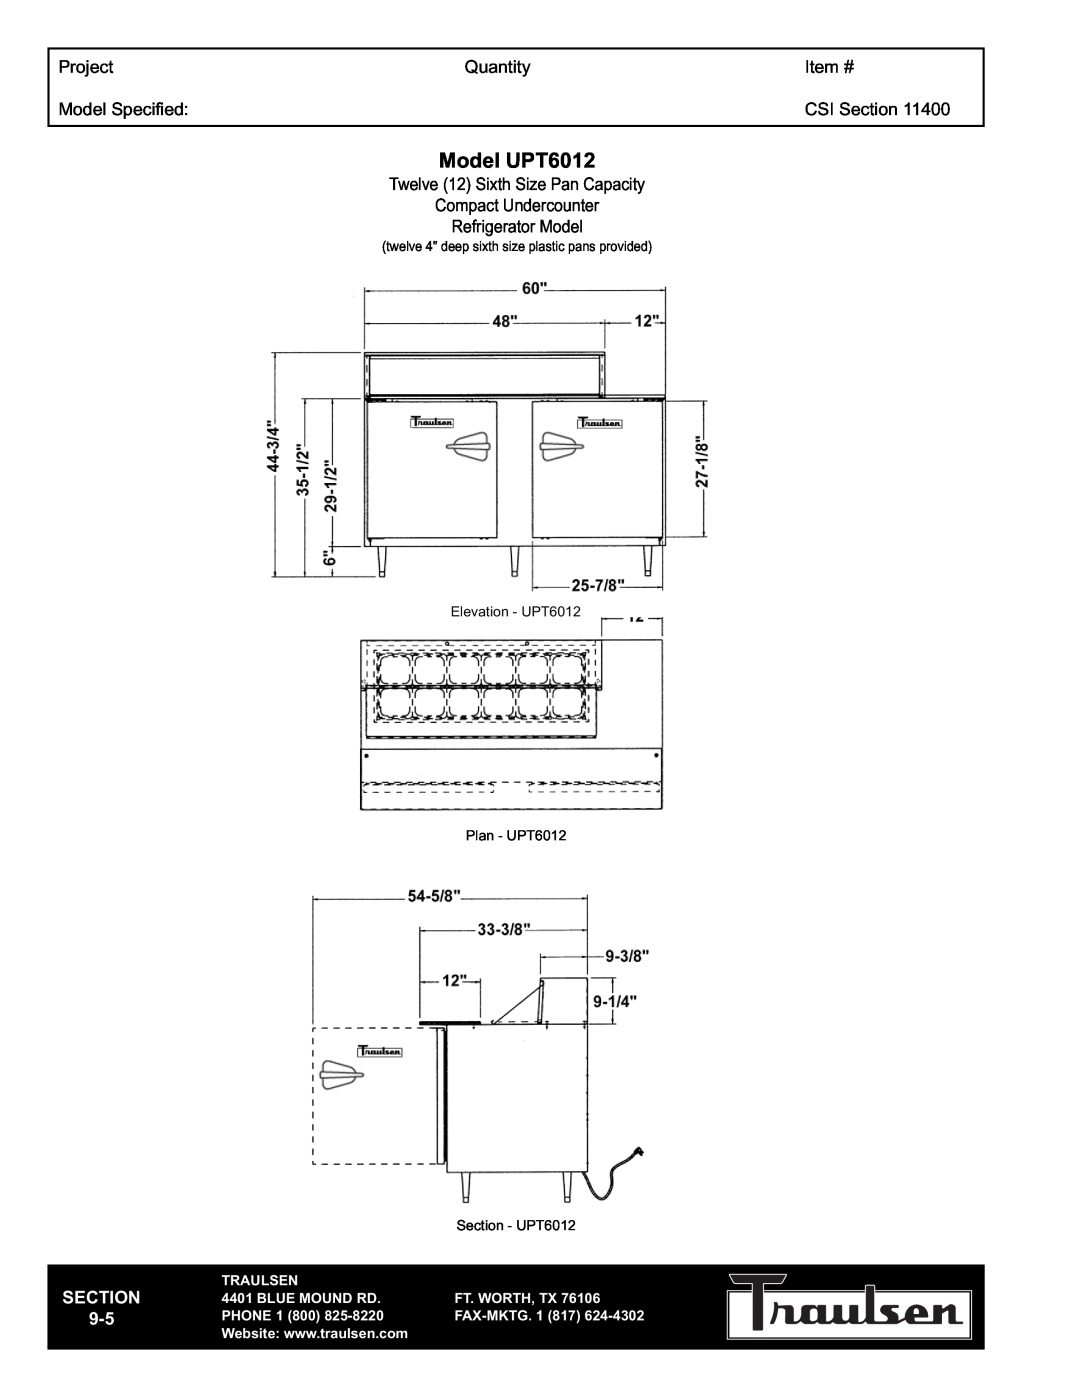 Traulsen UPT6024-LR Model UPT6012, Twelve 12 Sixth Size Pan Capacity, Compact Undercounter Refrigerator Model, Project 